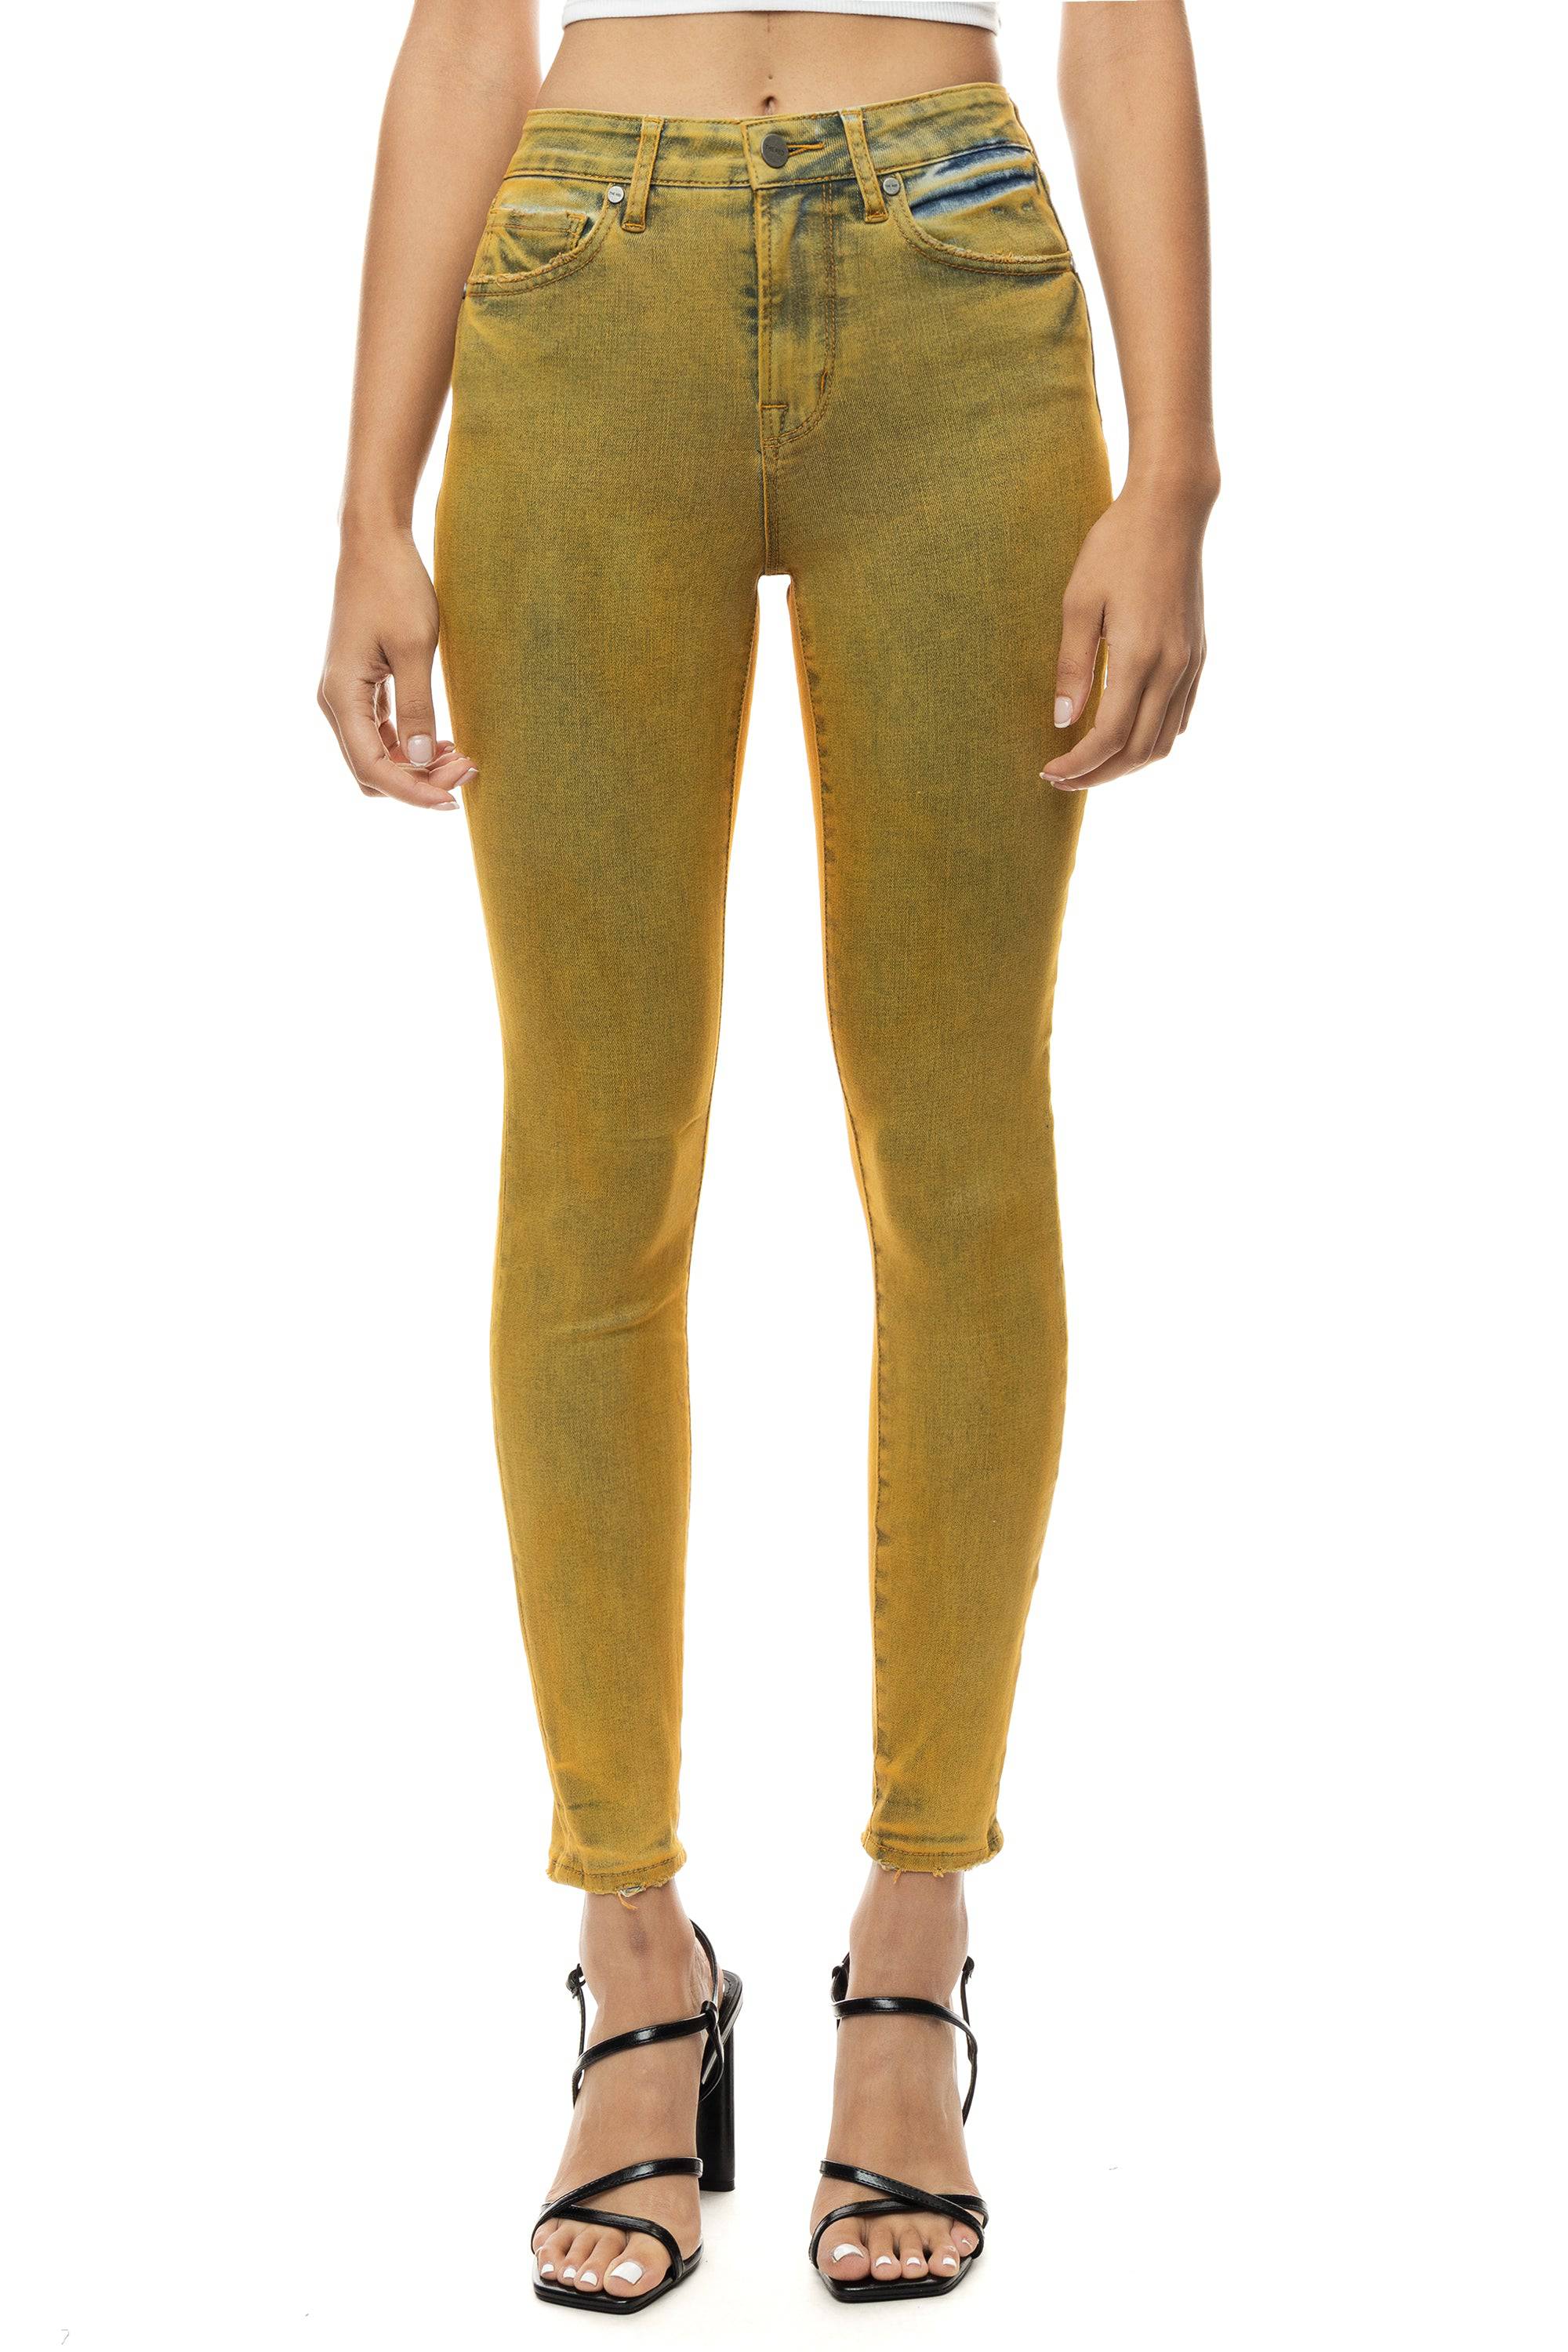 Levi´s #jeans #colores #amarillo #rosa #pantalón #dama #demi #curve  #Promoda #Outlet #estilo #casual #outfit #fashion #summer #clothes #…